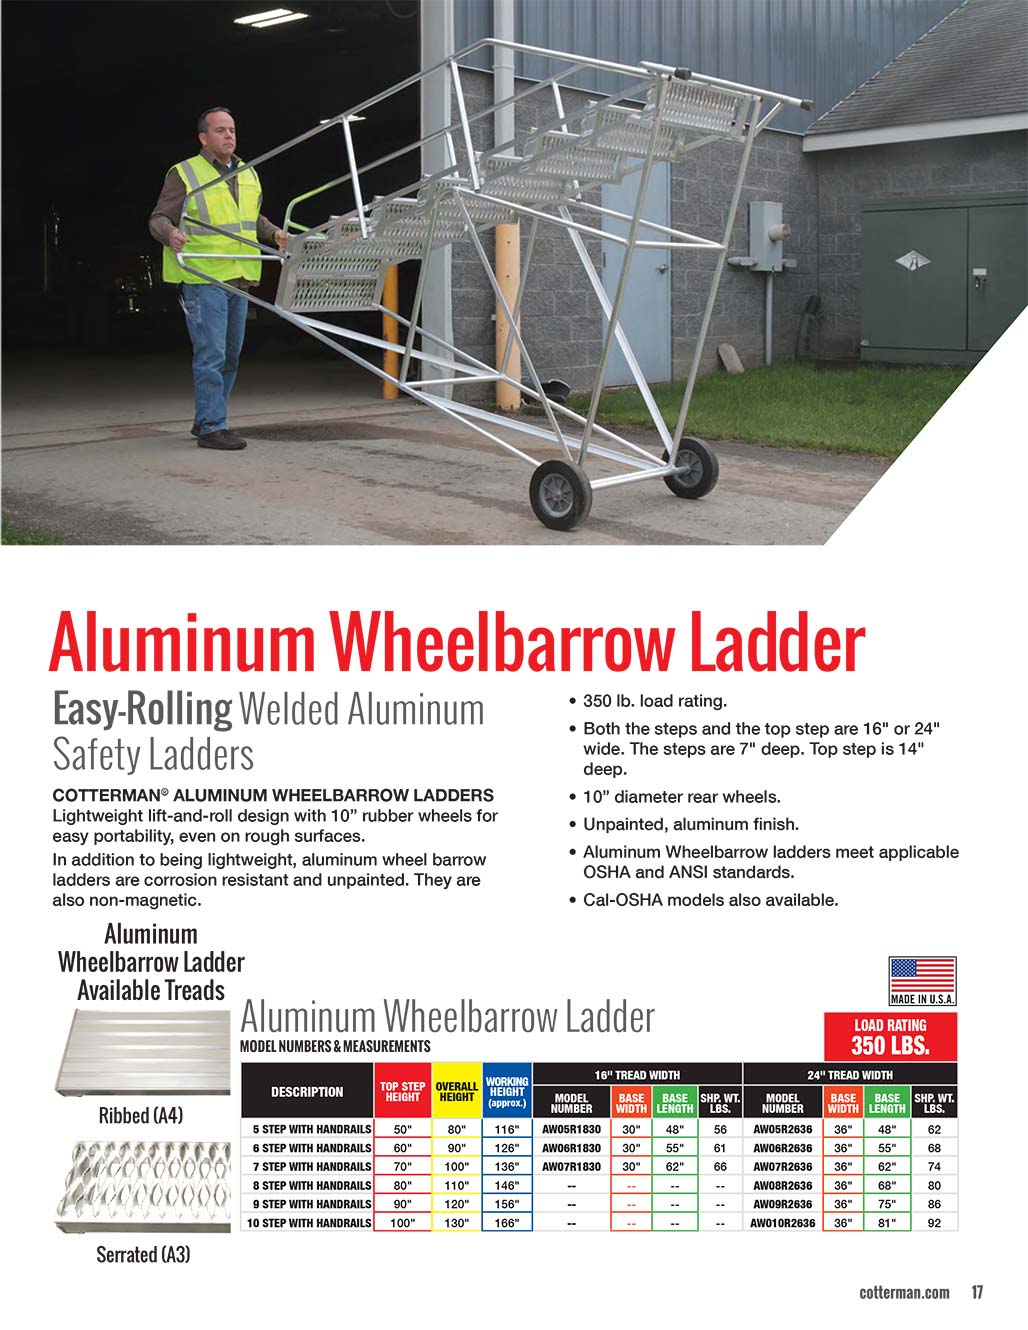 Cotterman Wheelbarrow Ladder file & Product Information 